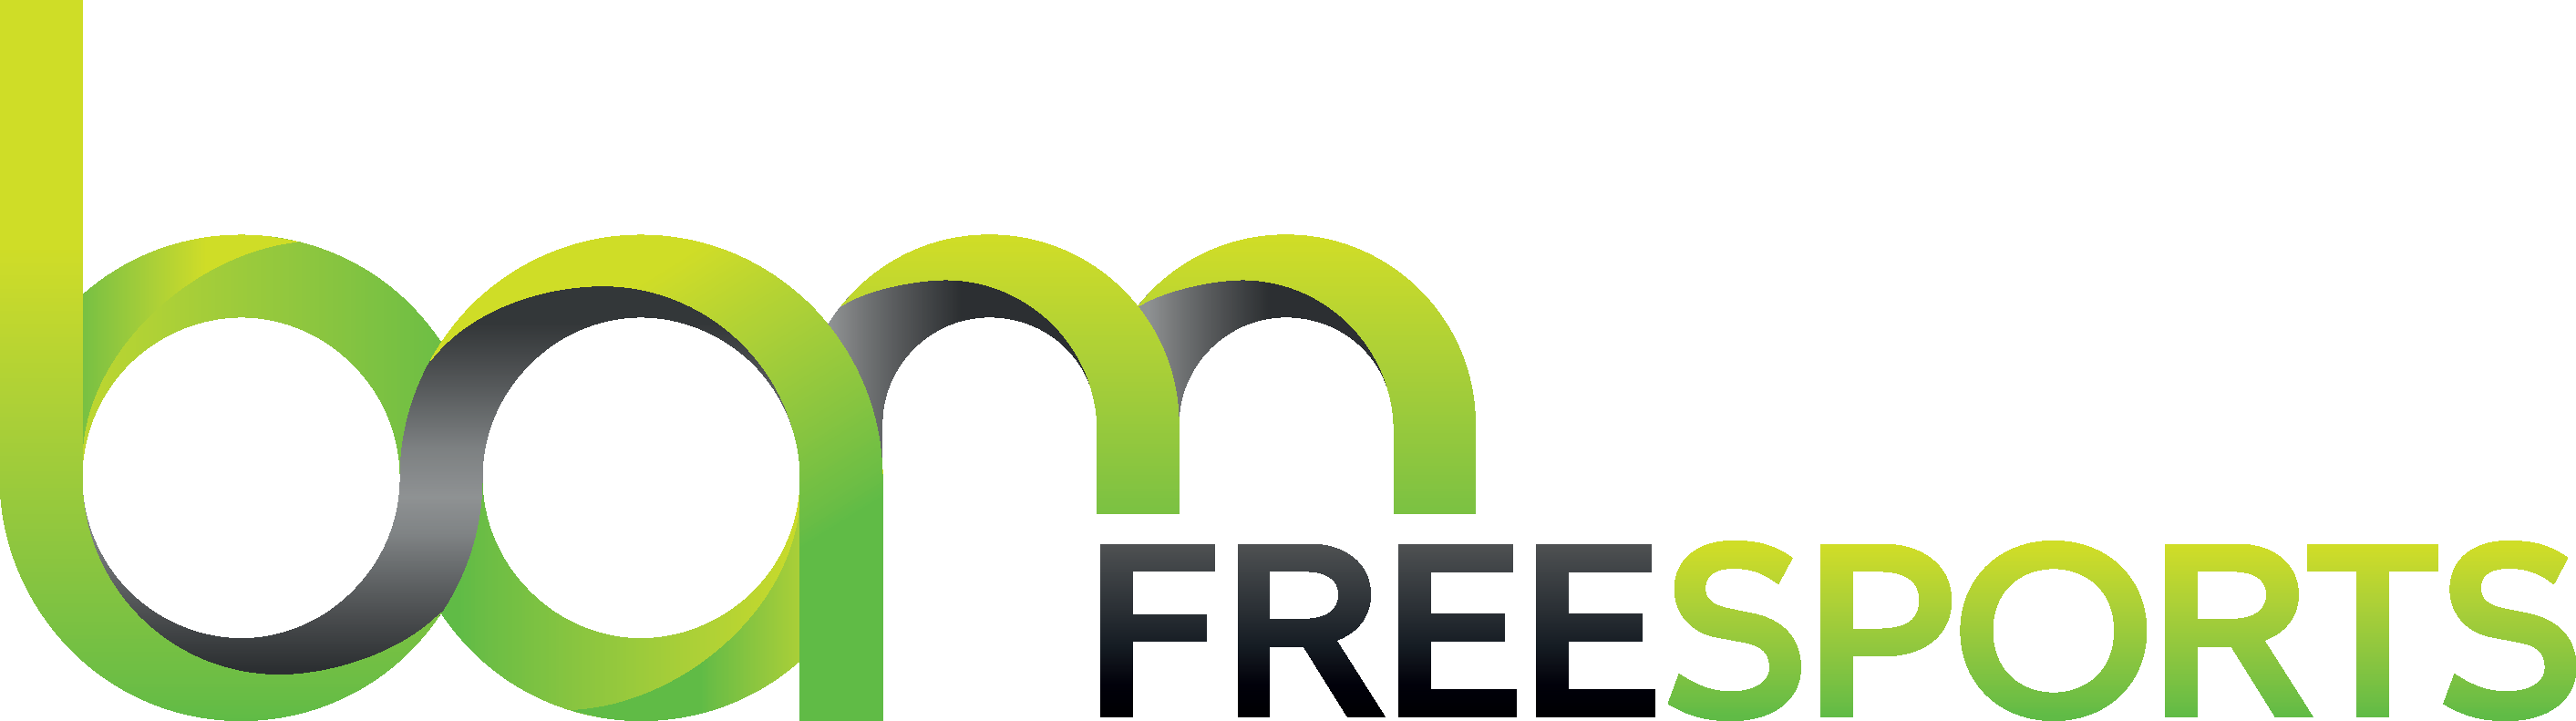 Logo Bam Freesports png